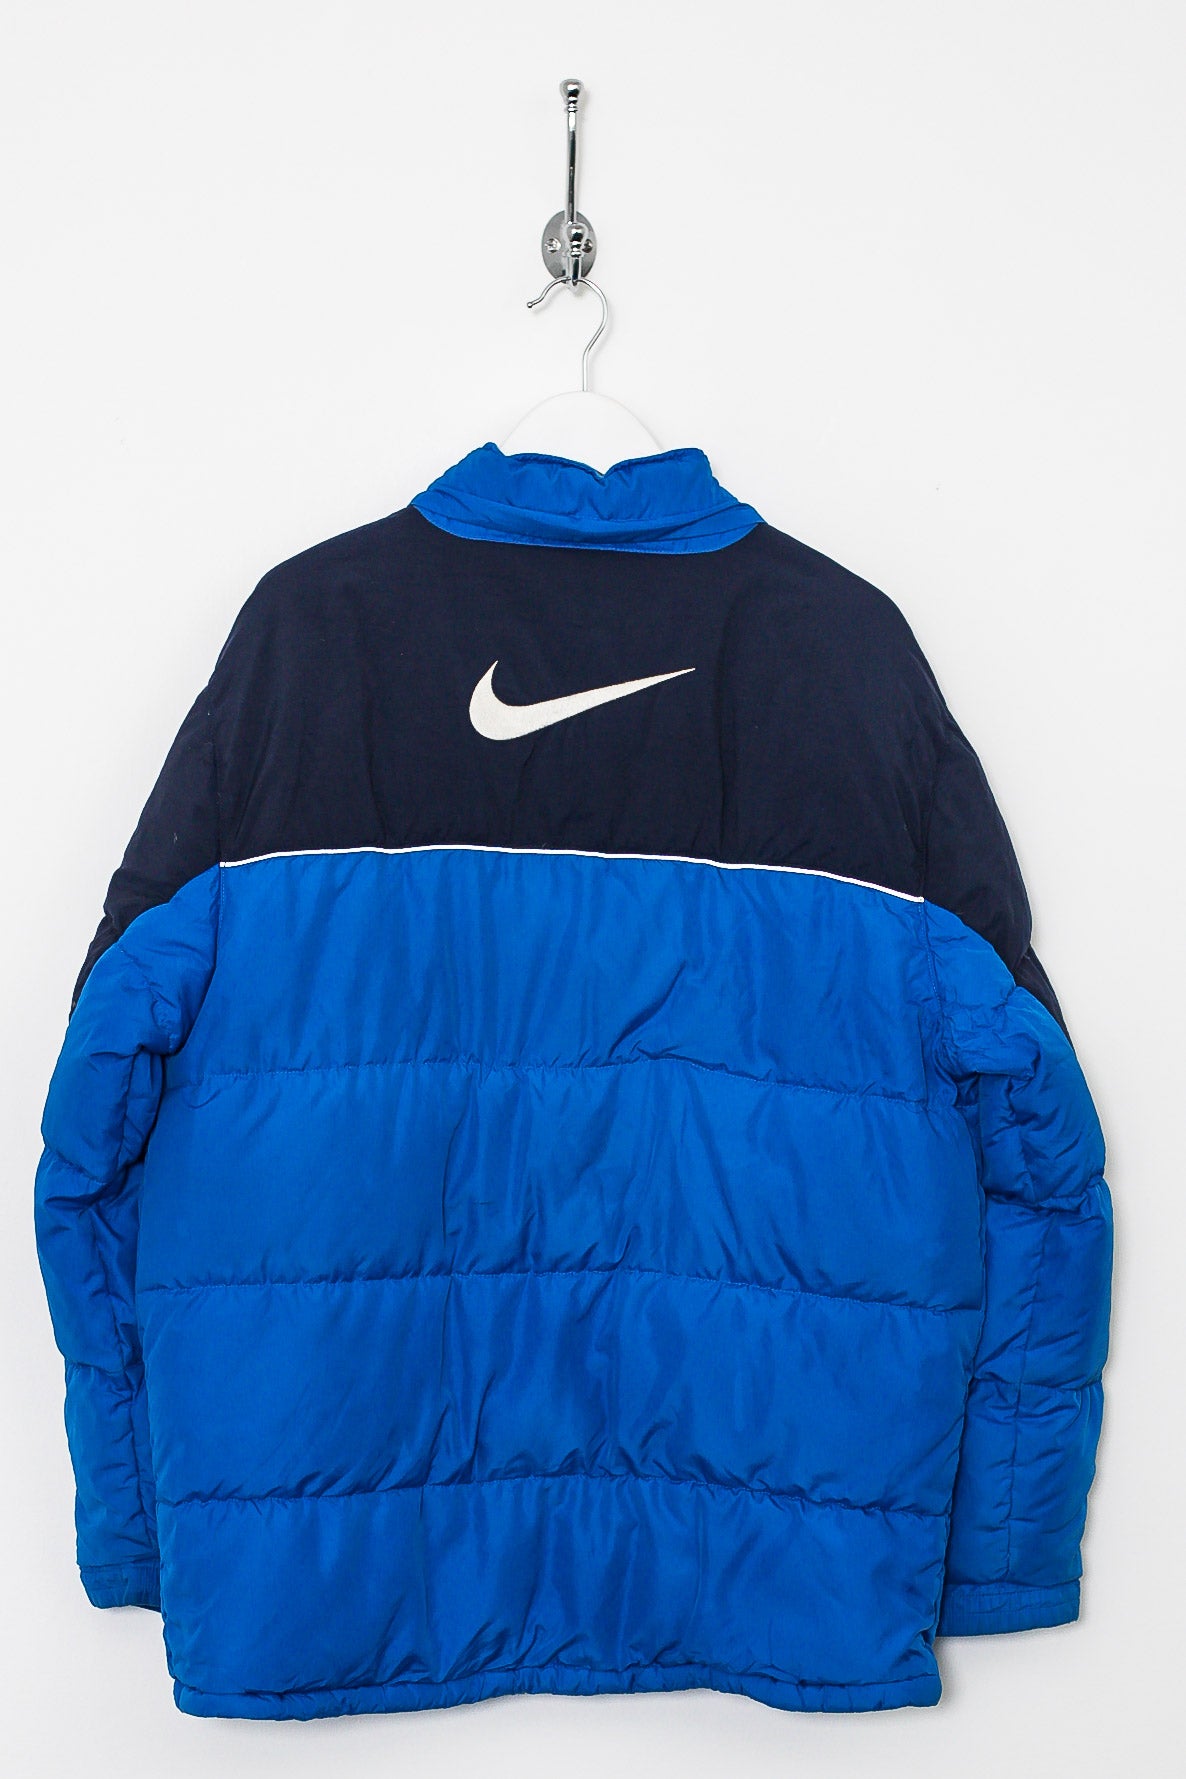 Vintage Jackets & Coats – Tagged "Nike" – Stocked Vintage